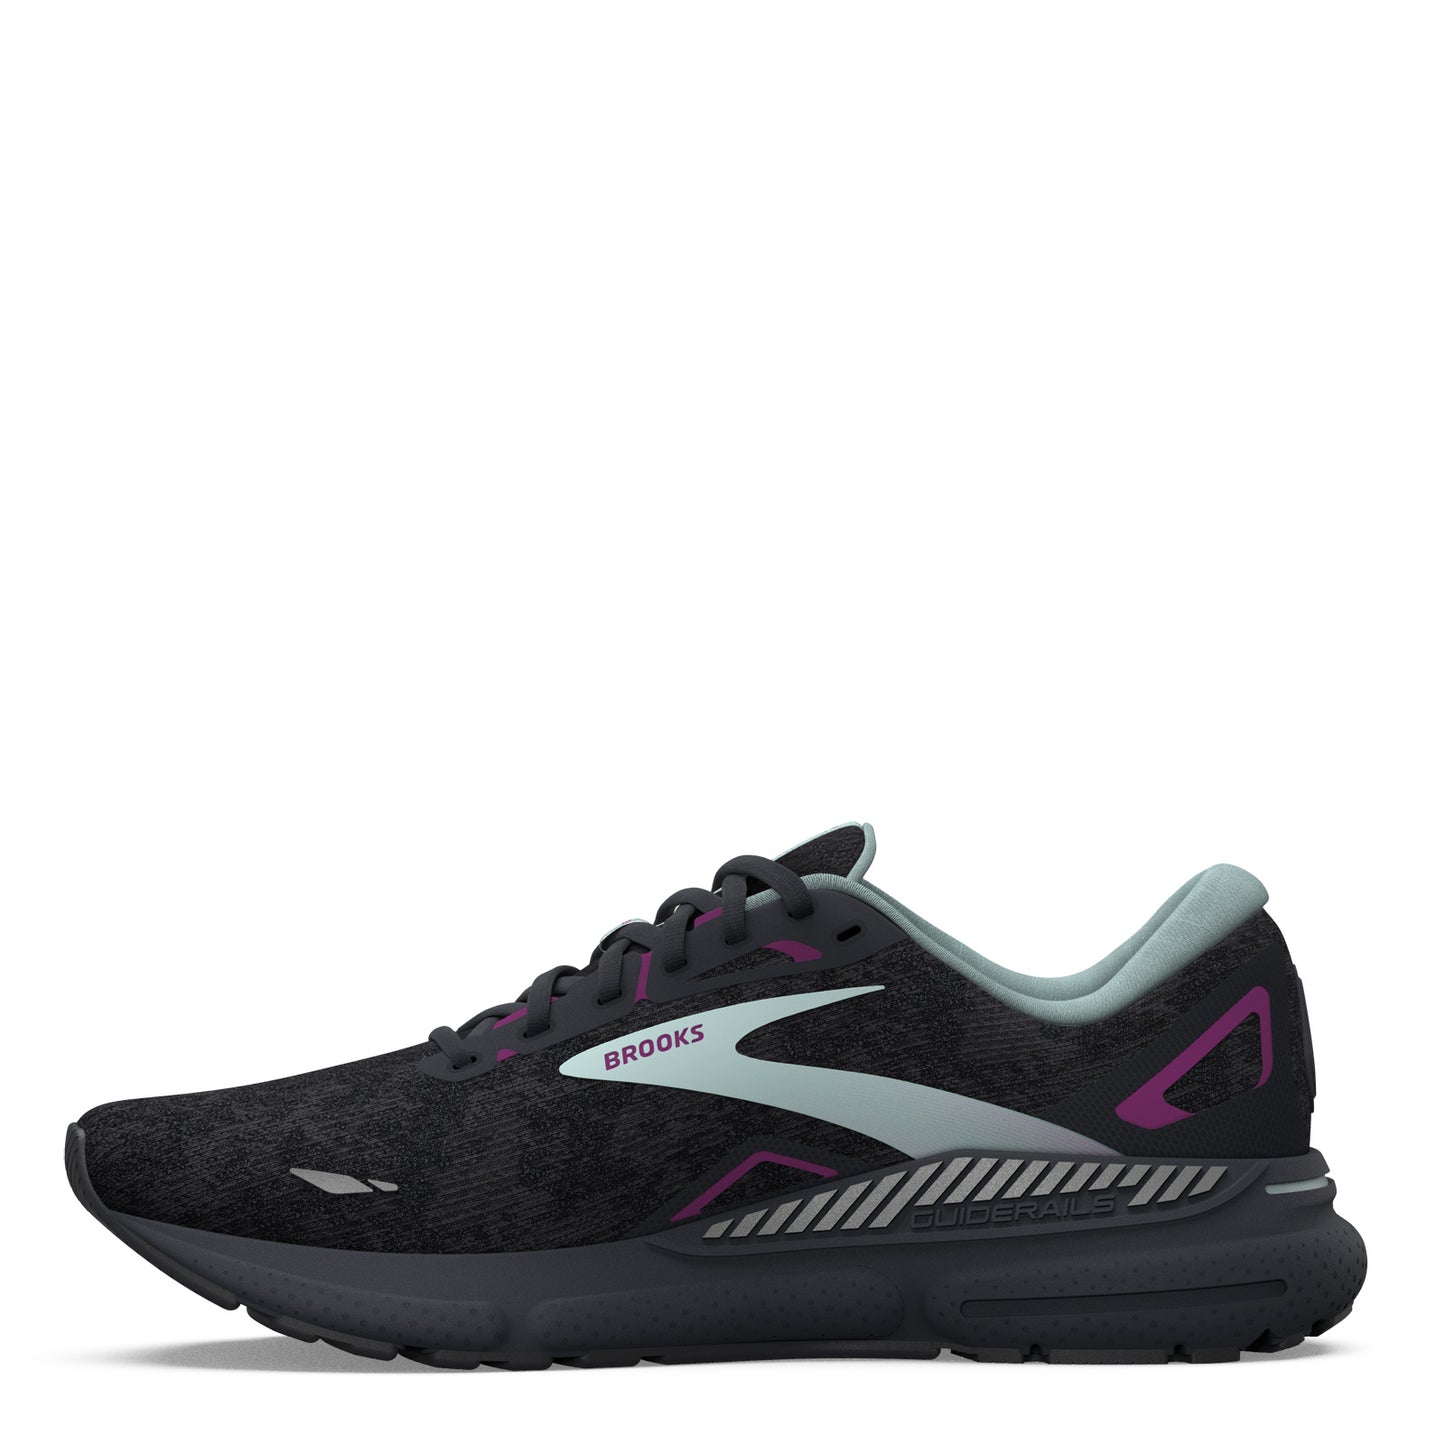 Peltz Shoes  Women's Brooks Adrenaline GTS 23 Running Shoe – Wide Width Black/Light Blue/Purple 120381 1D 072